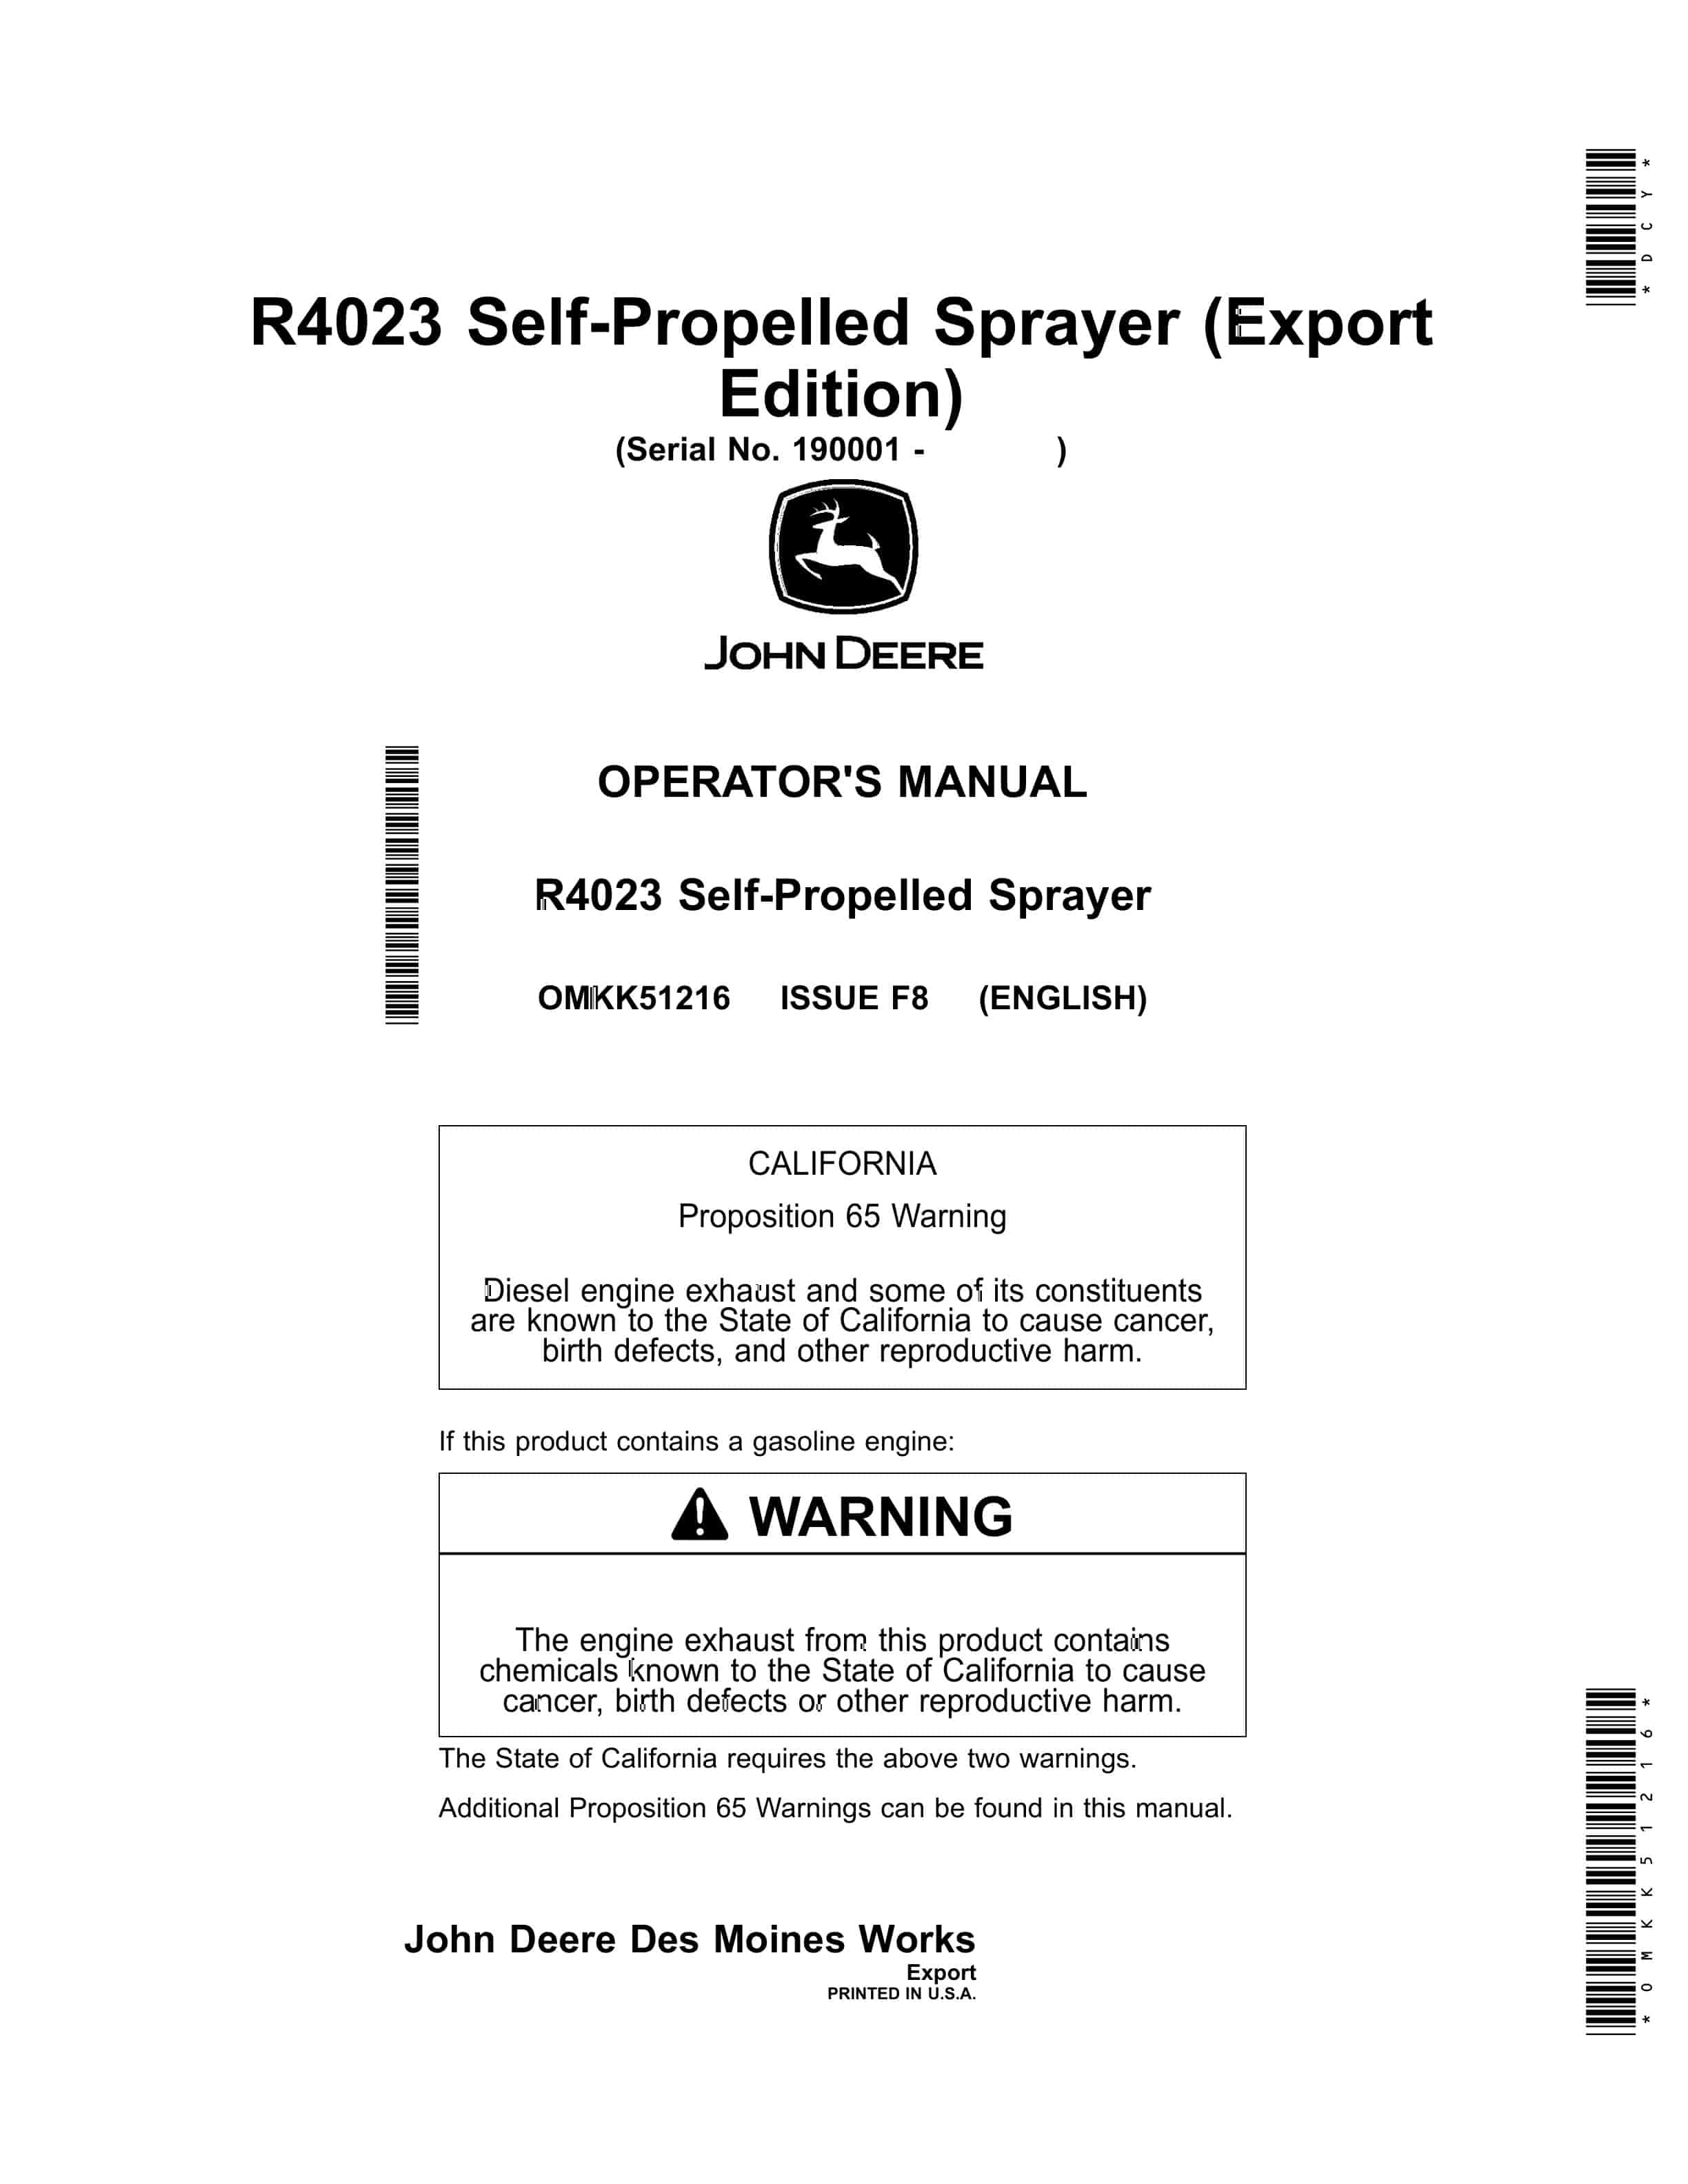 John Deere R4023 Self Propelled Sprayer Operator Manual OMKK51216 1